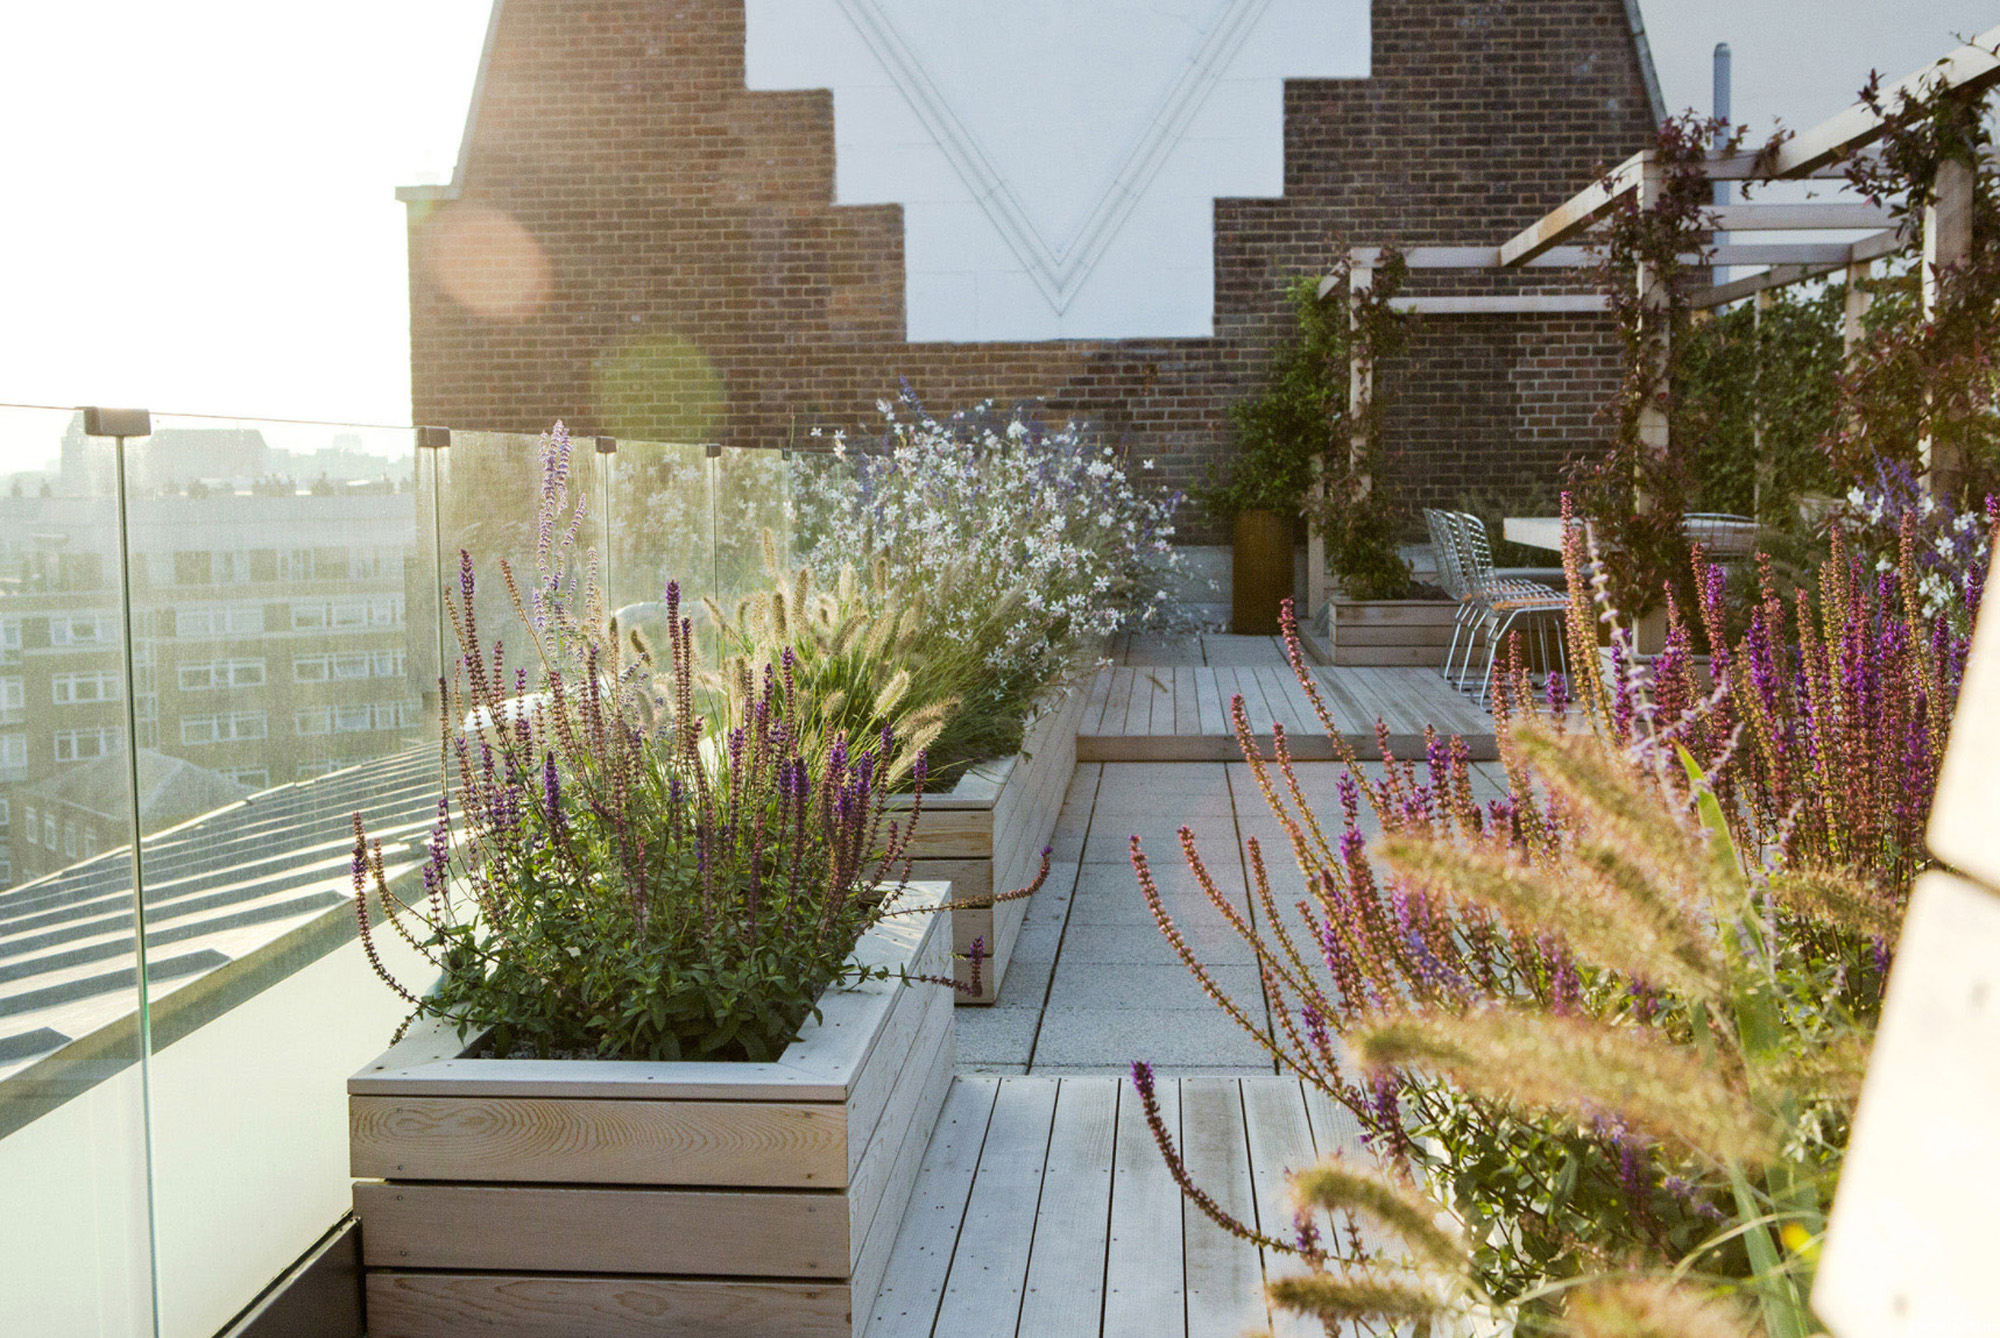 Landscaped rooftop garden in London by designer Adolfo Harrison